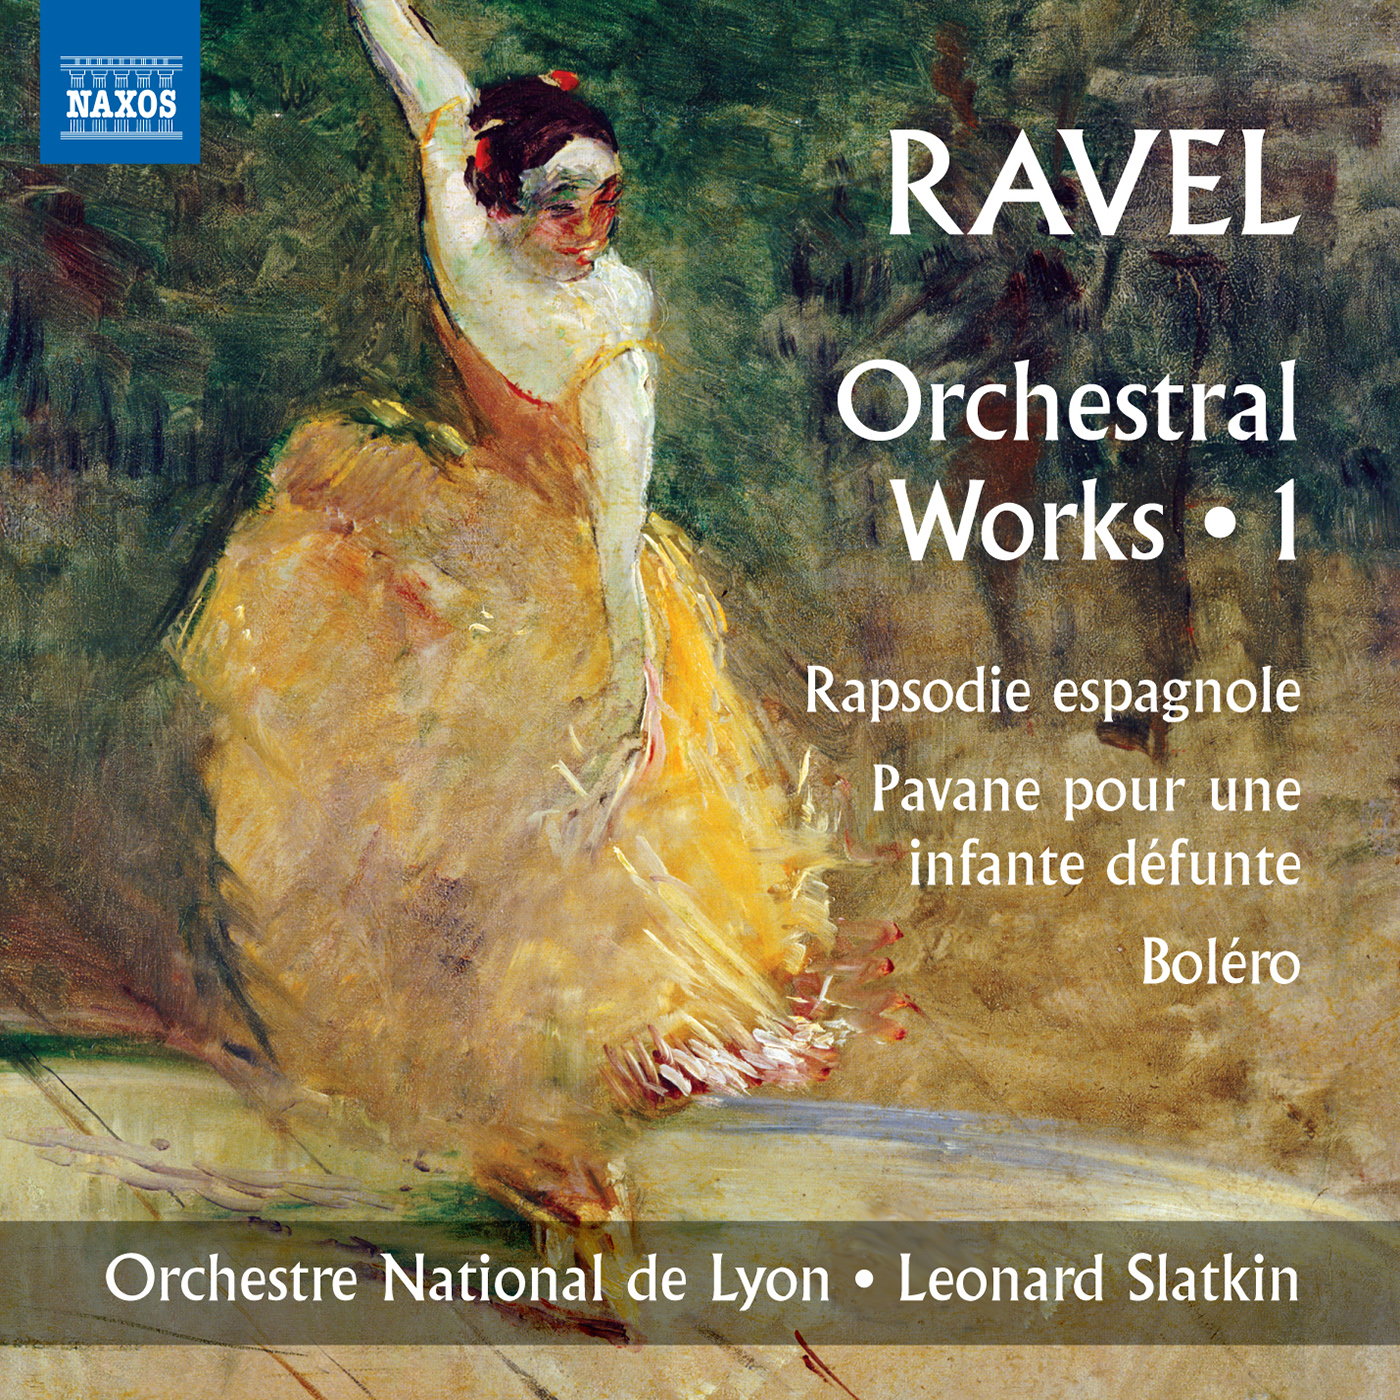 RAVEL, M.: Orchestral Works, Vol. 1 - Alborada del gracioso / Rapsodie espagnole (Lyon National Orchestra, Slatkin)